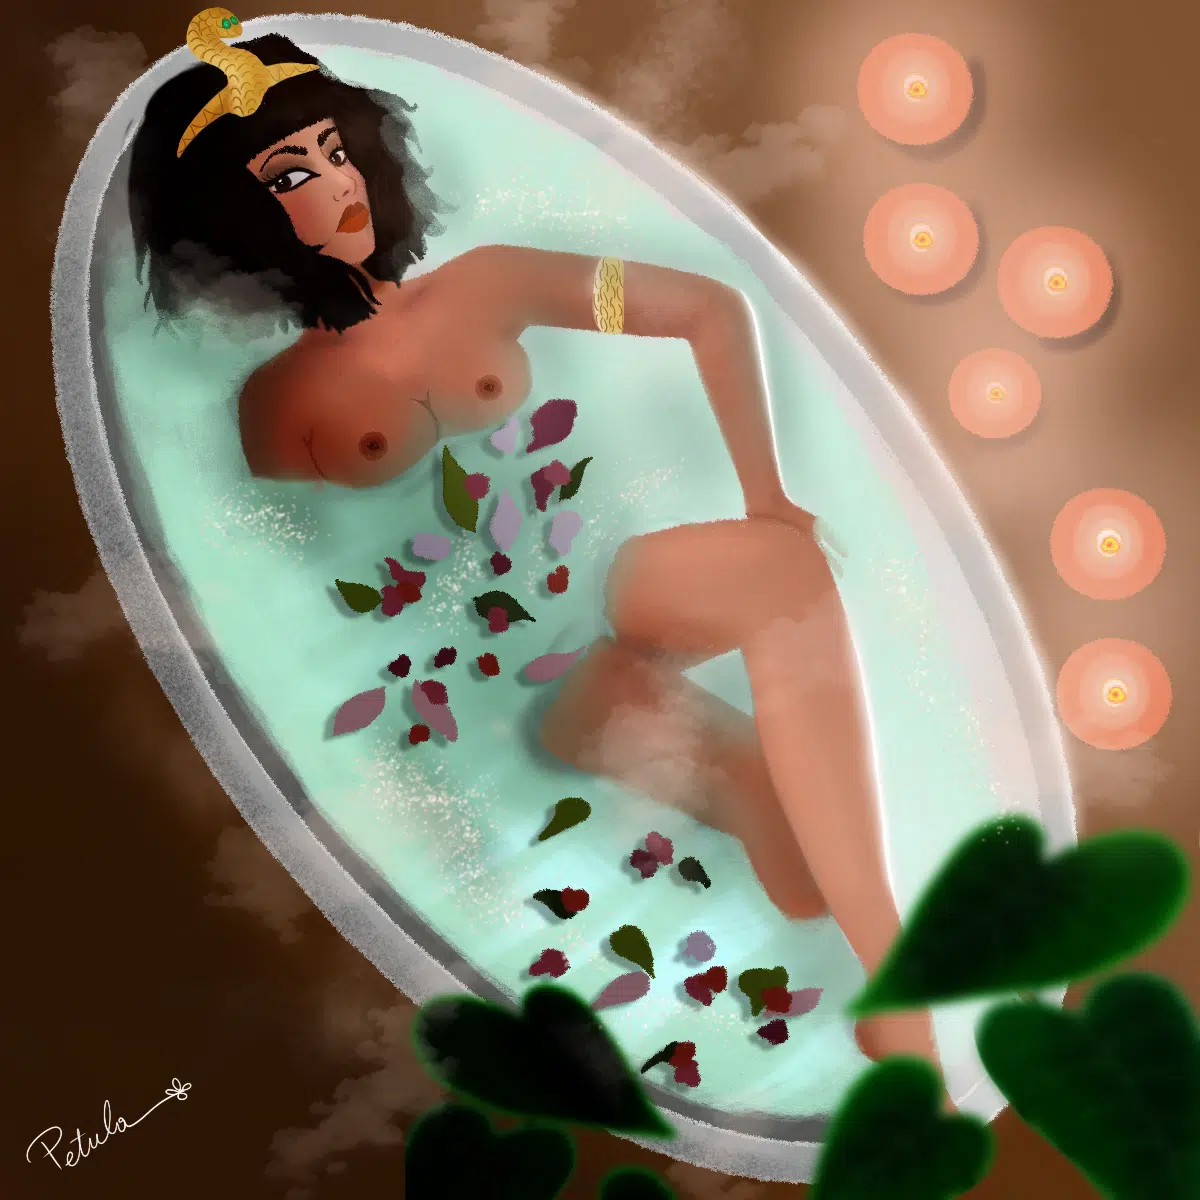 Petula Rocher #strongwomenartchallenge 3. Cleopatra